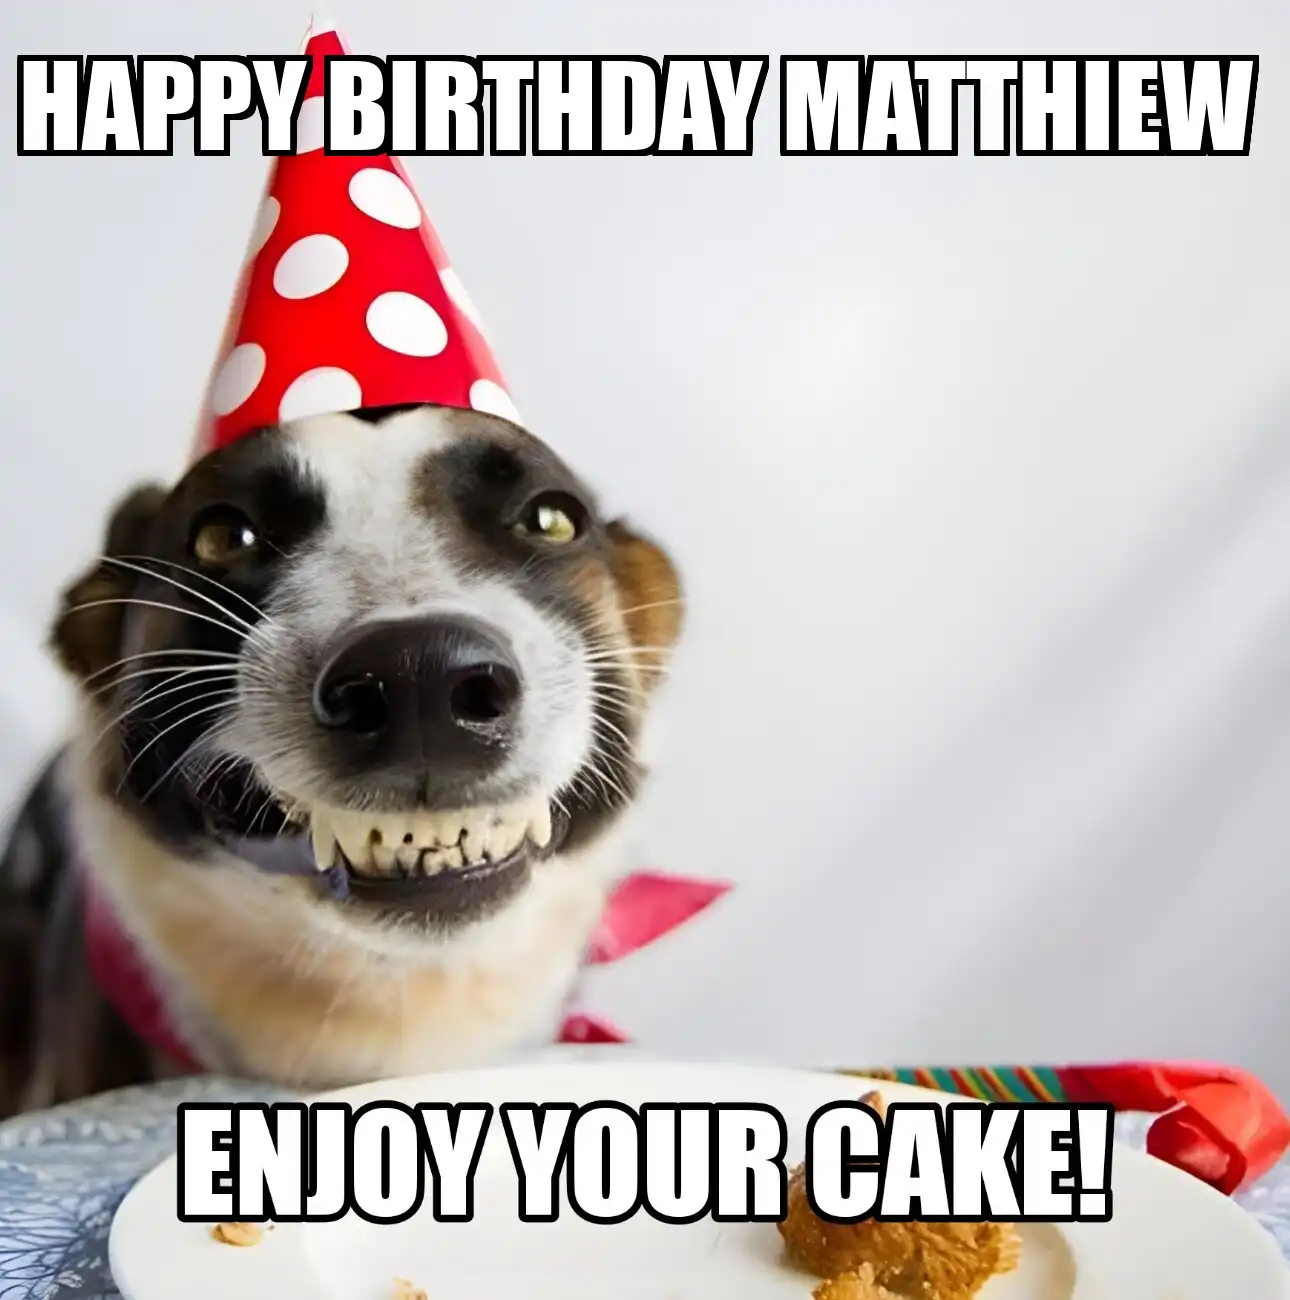 Happy Birthday Matthiew Enjoy Your Cake Dog Meme